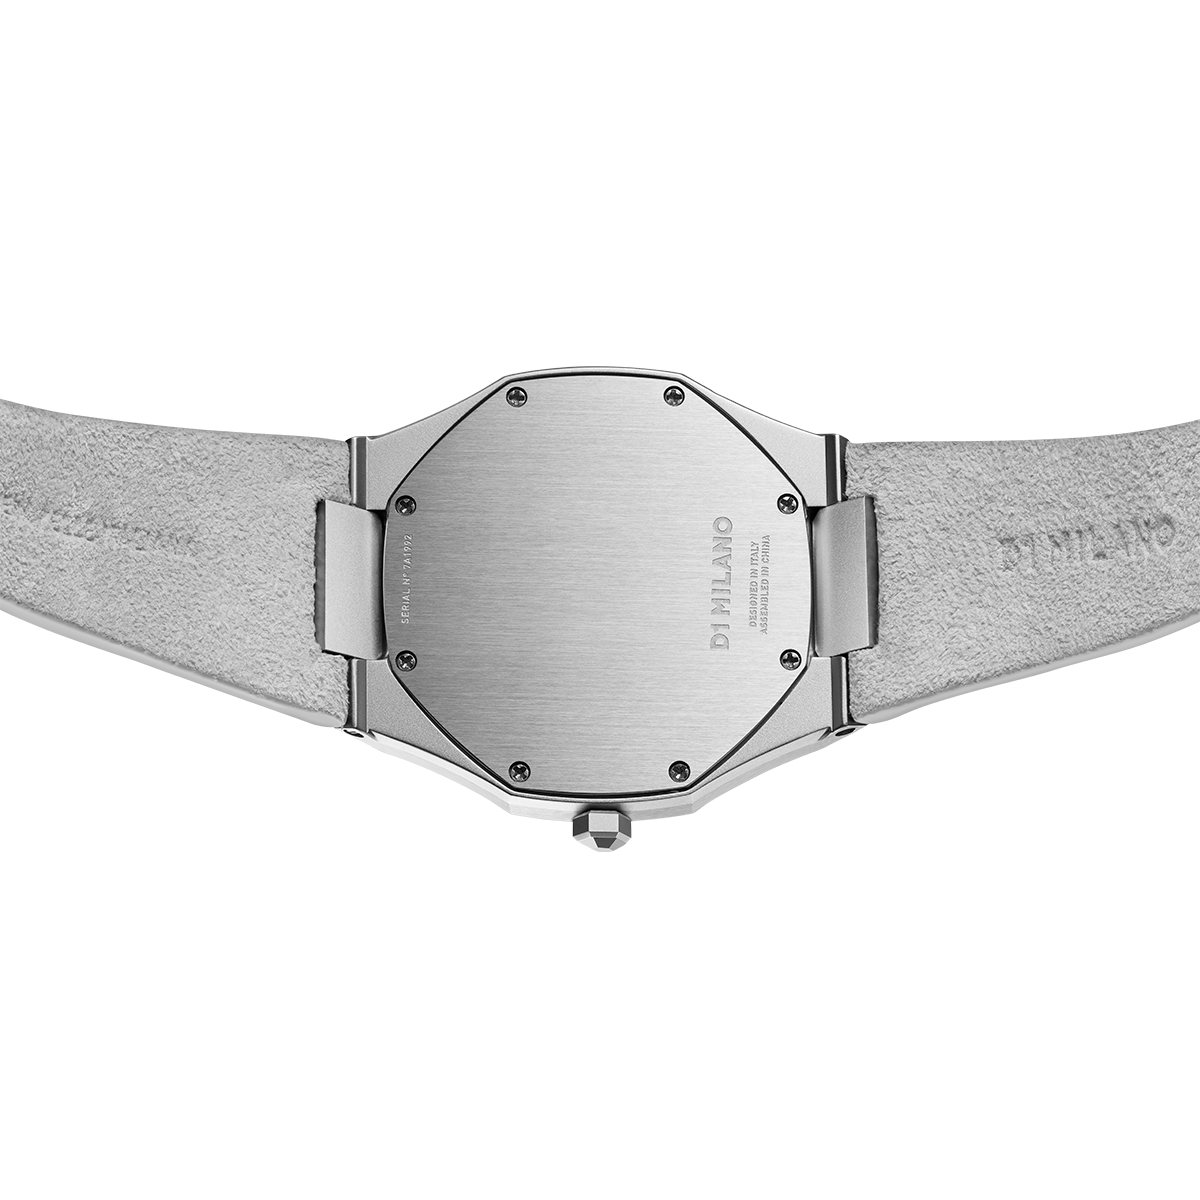 Ladies Ultra Thin Suede Carrara Grey Watch D1-A-UTL02 D1 Milano